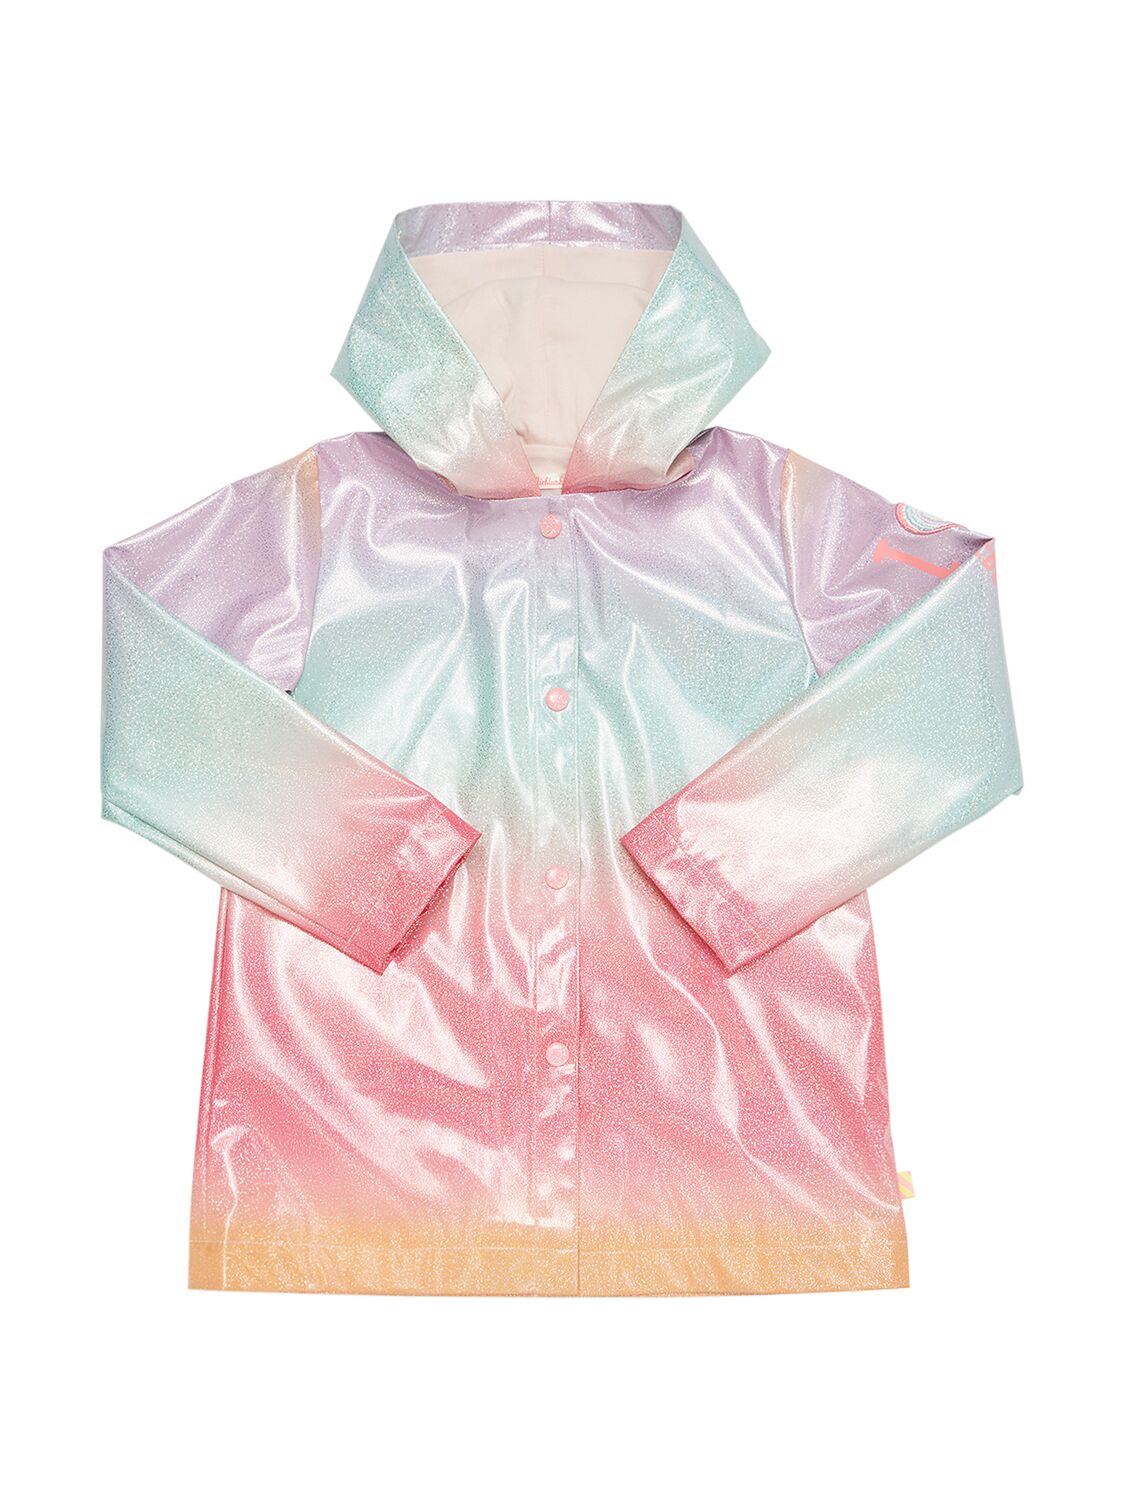 Image of Glittered Printed Nylon Raincoat